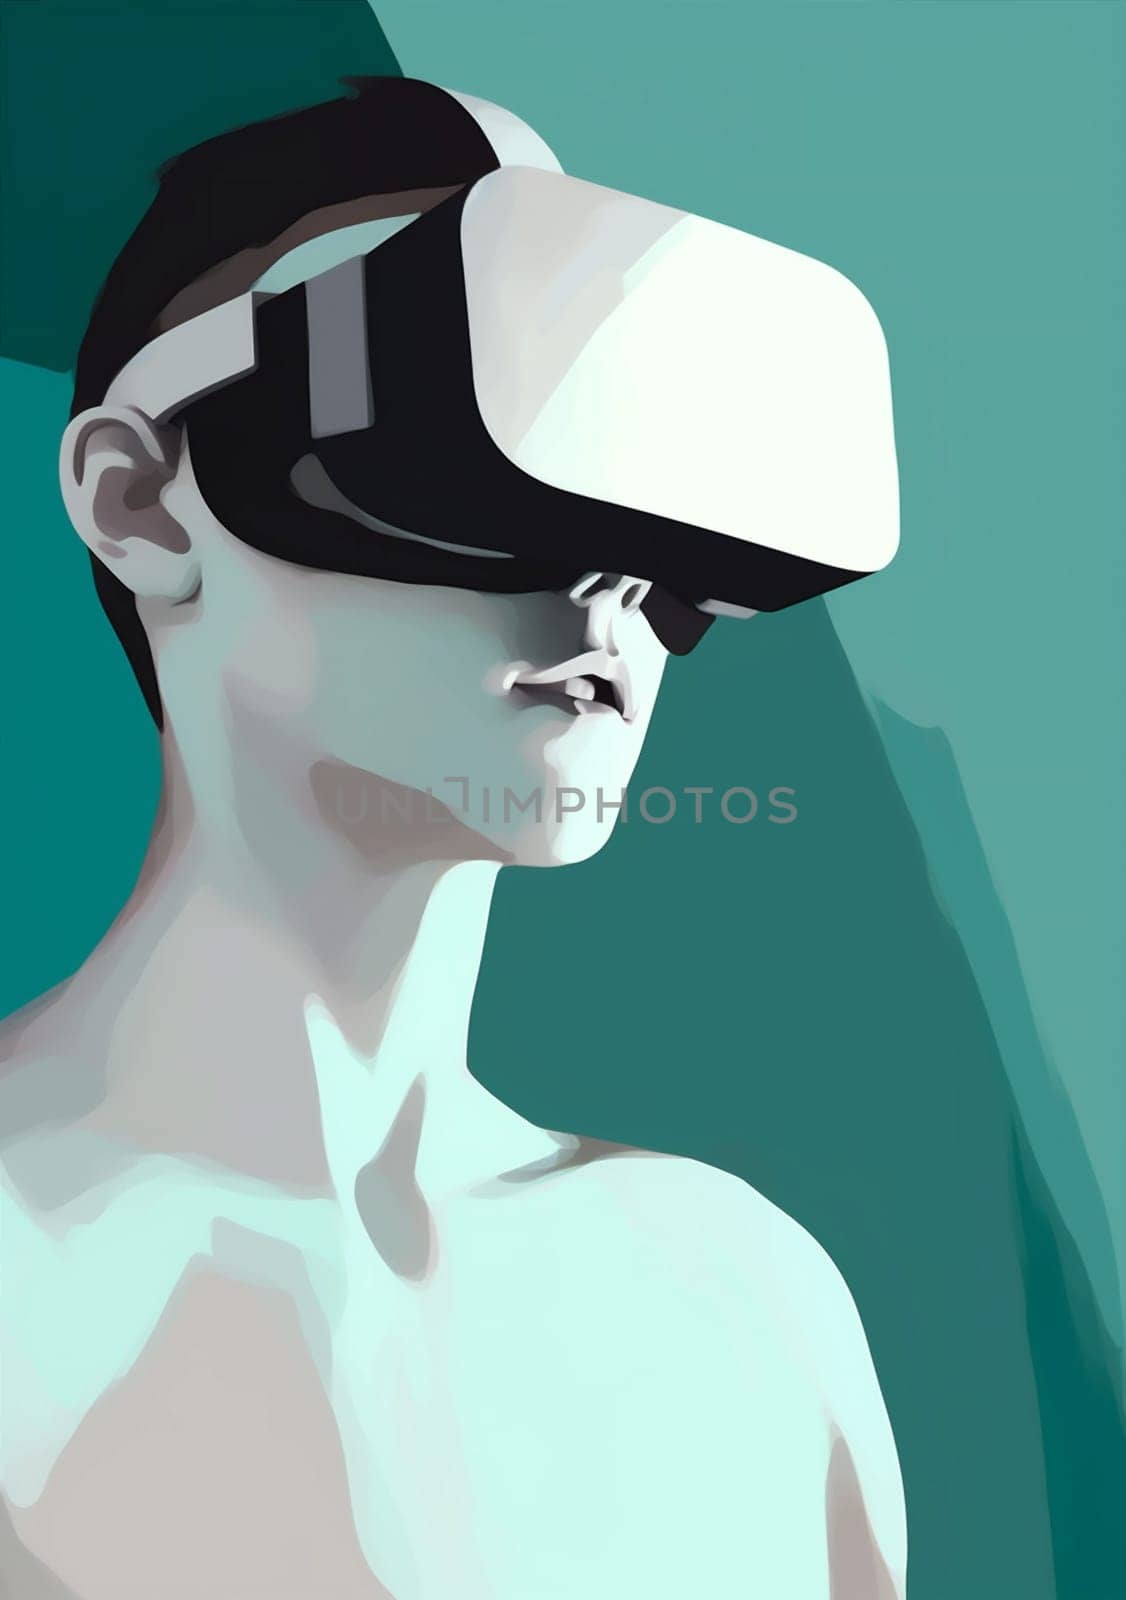 vr man technology digital headset cyber glasses goggles gadget smart futuristic. Generative AI. by Vichizh